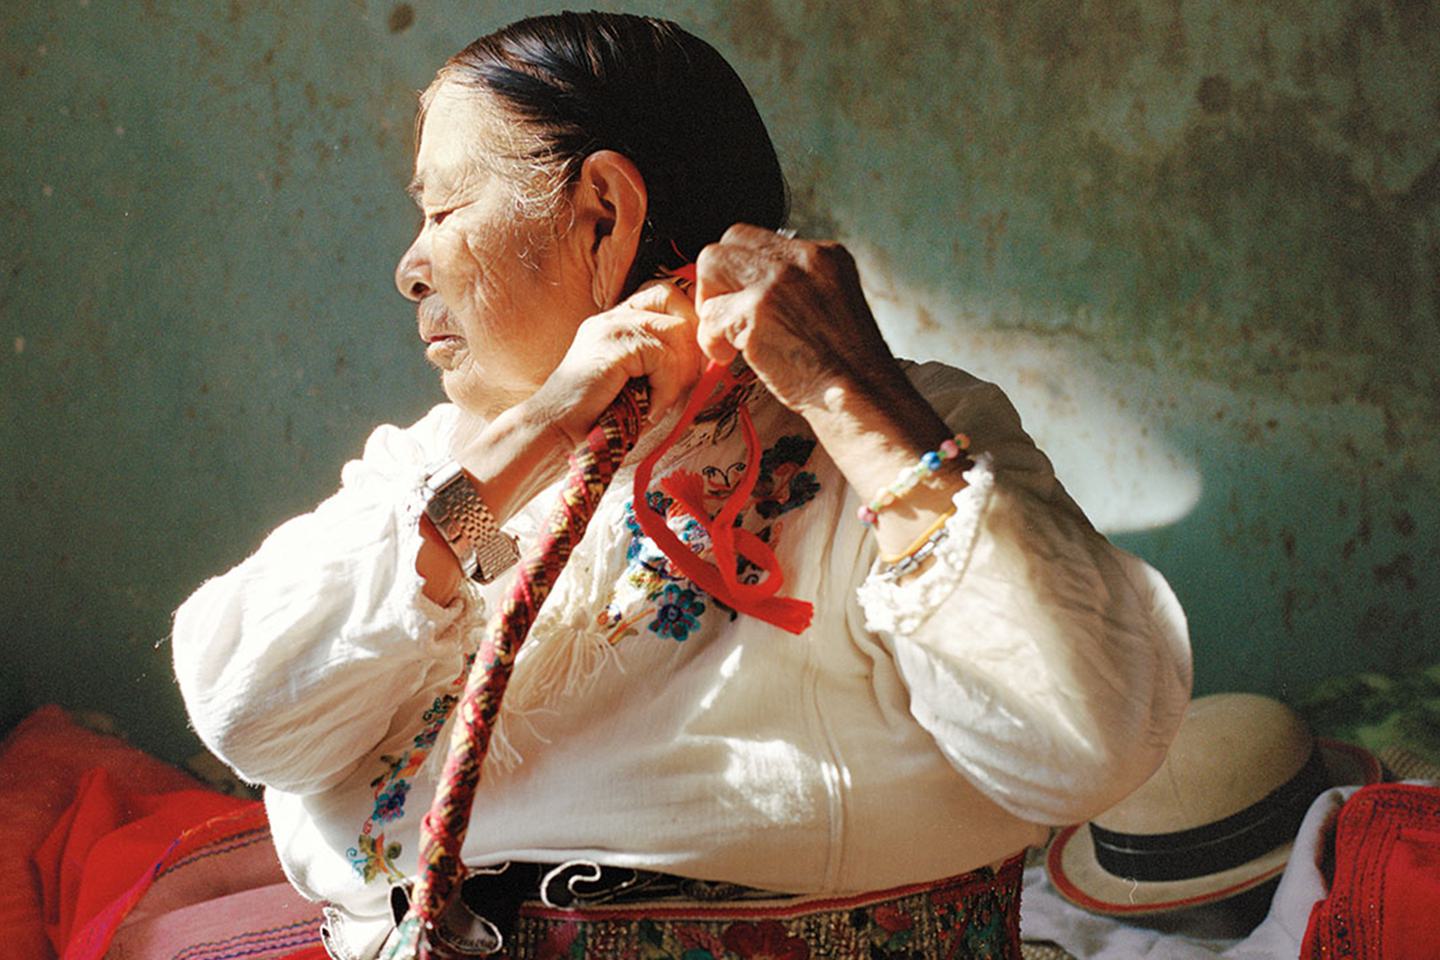 A photo of an older Hispanic woman braiding her long hair.